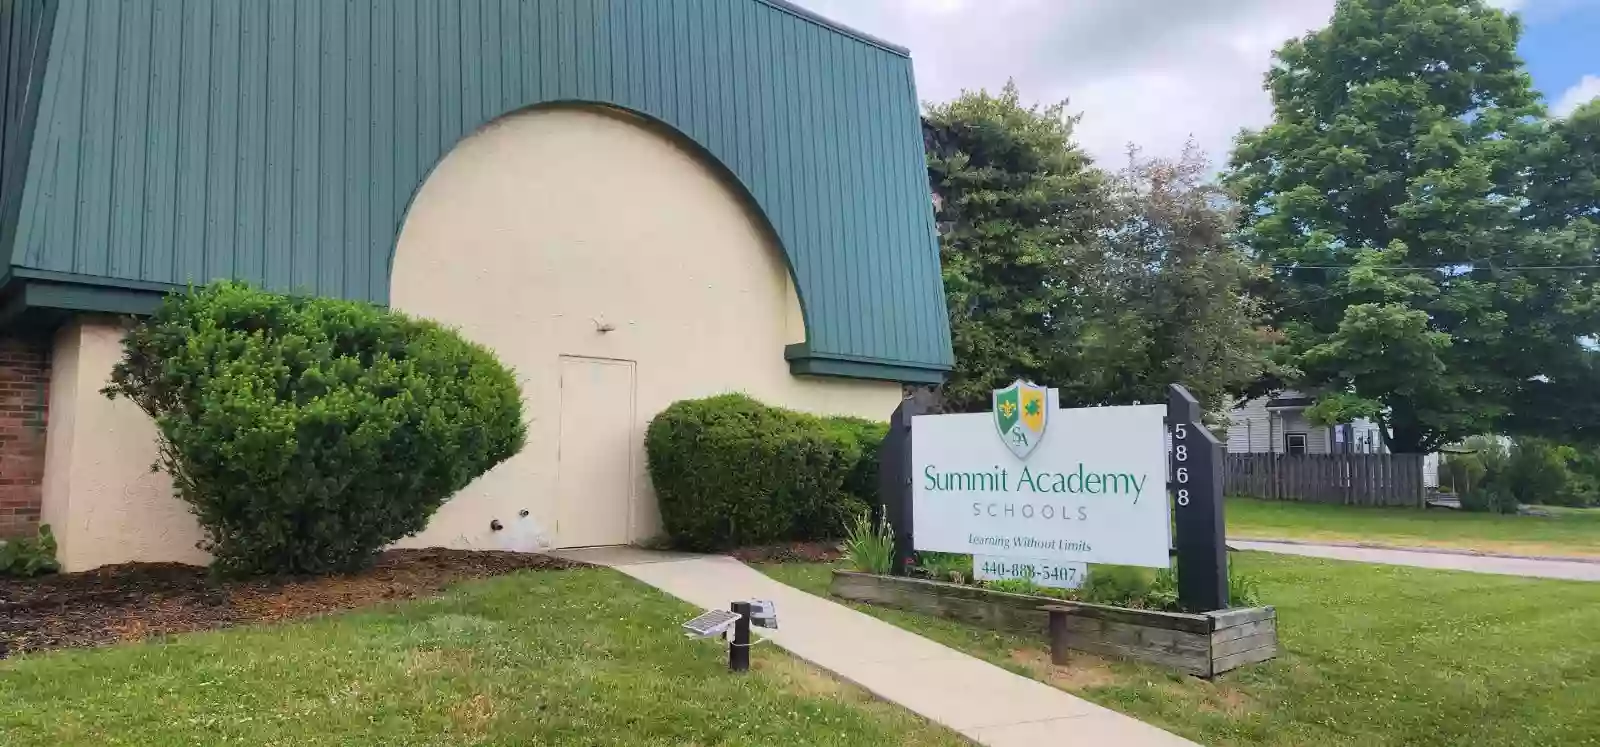 Summit Academy Community School